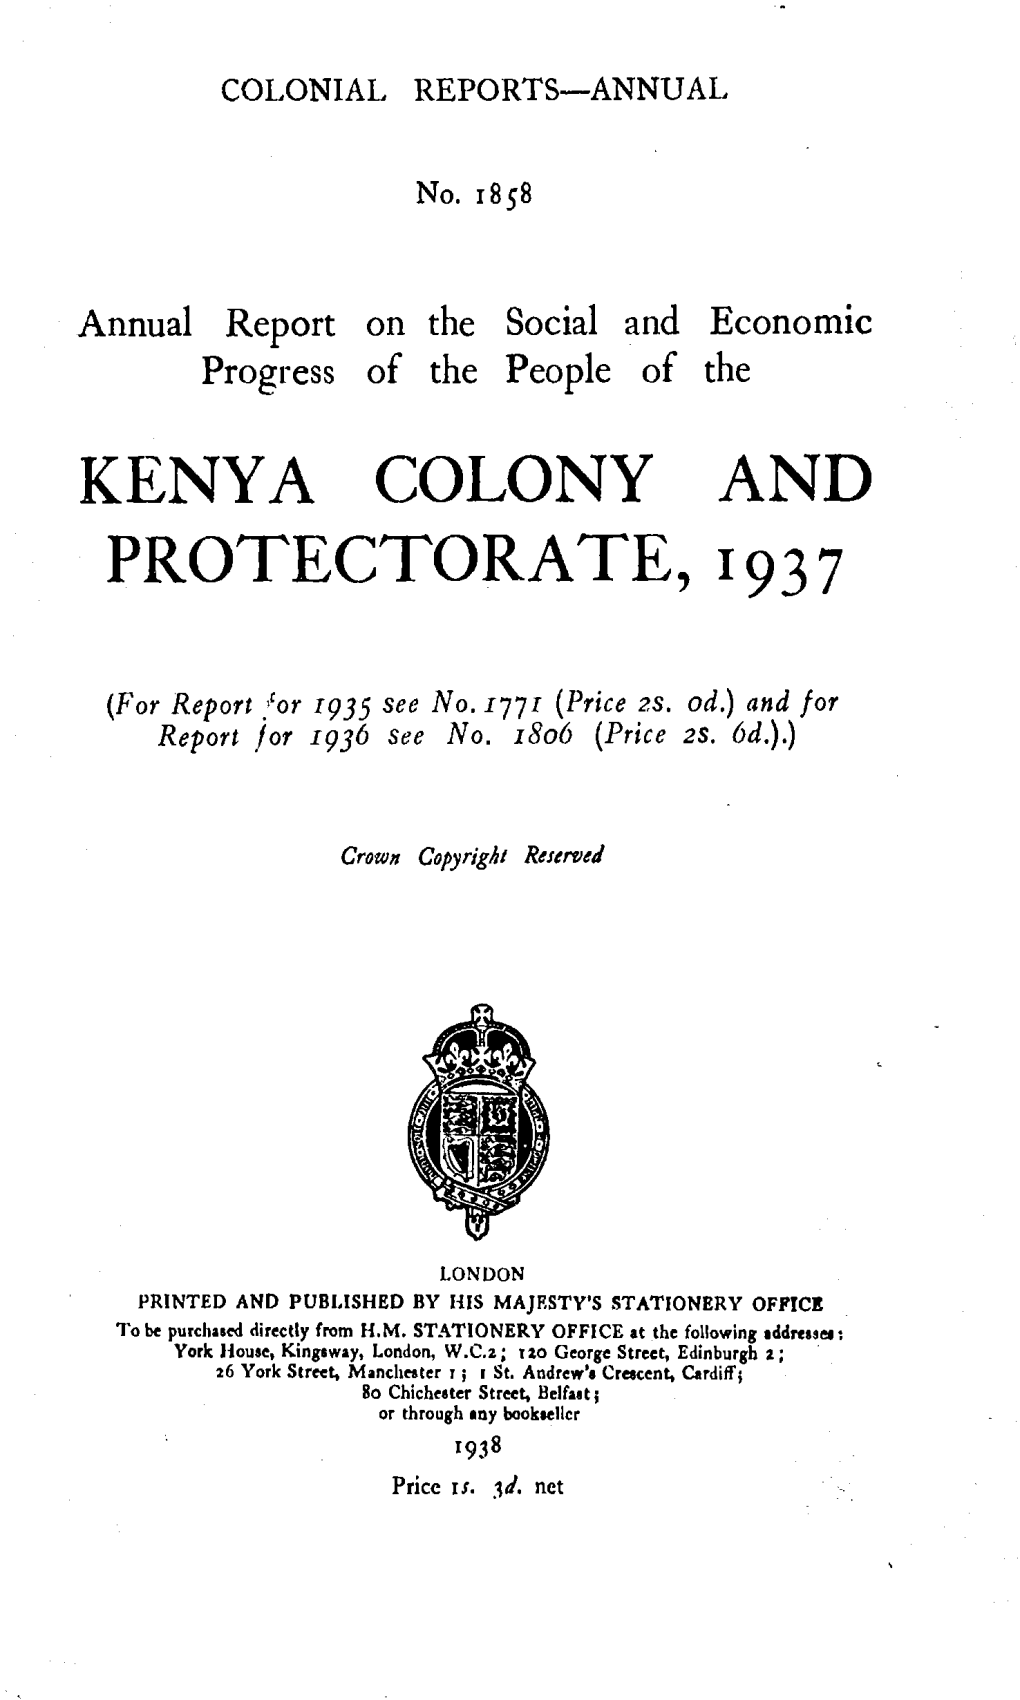 Annual Report of the Colonies, Kenya, 1937